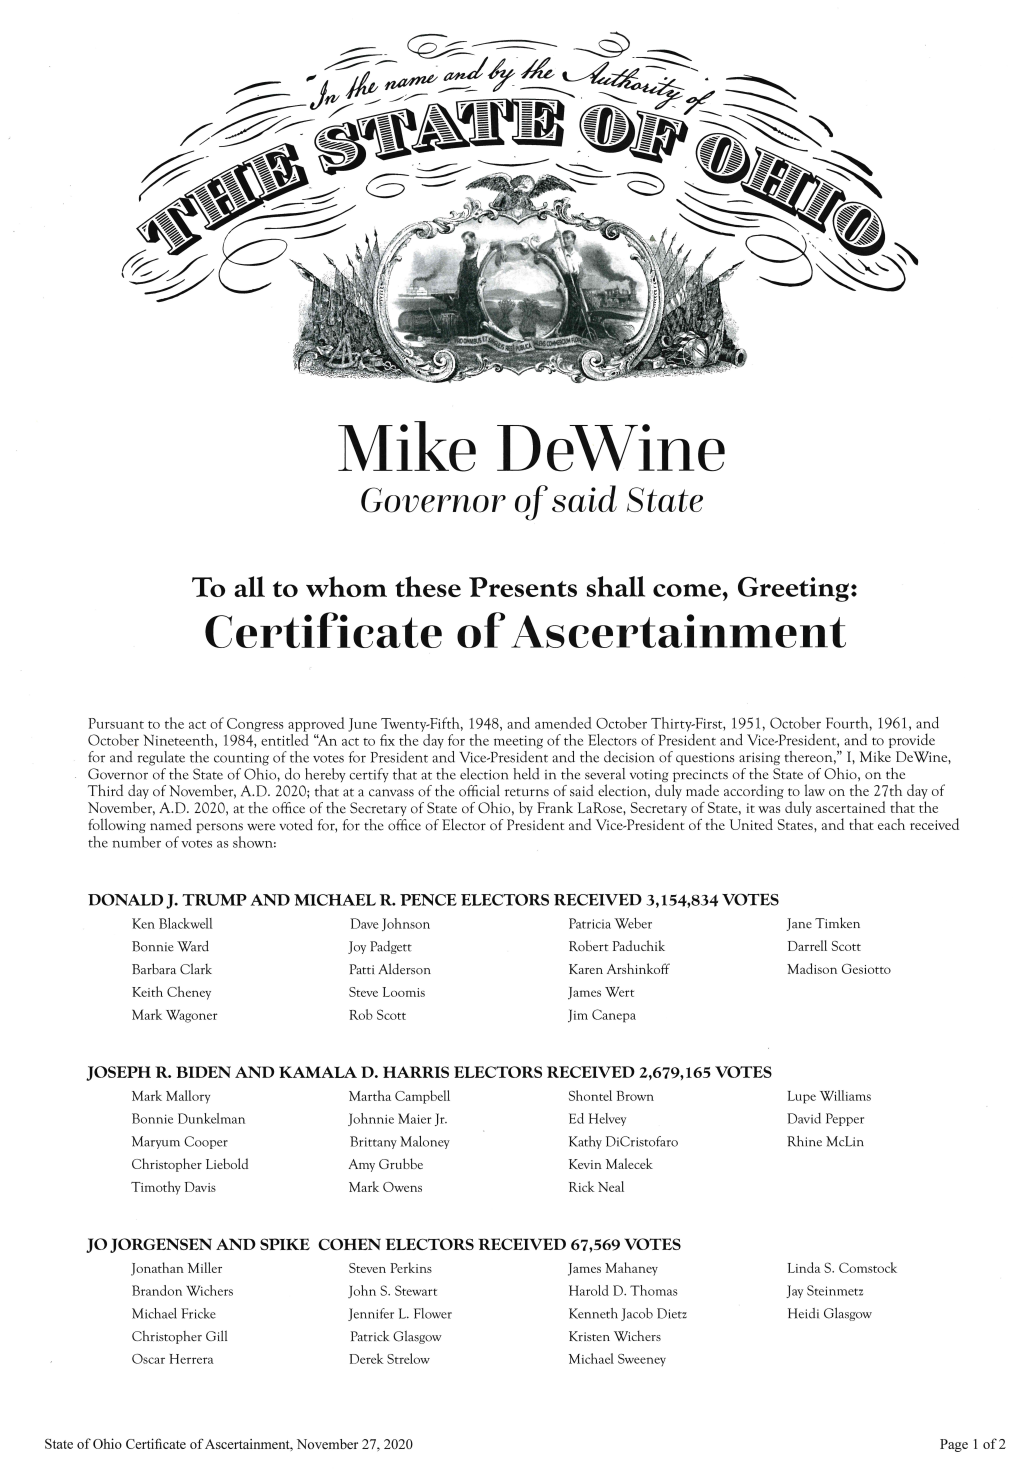 Ohio Certificate of Ascertainment 2020